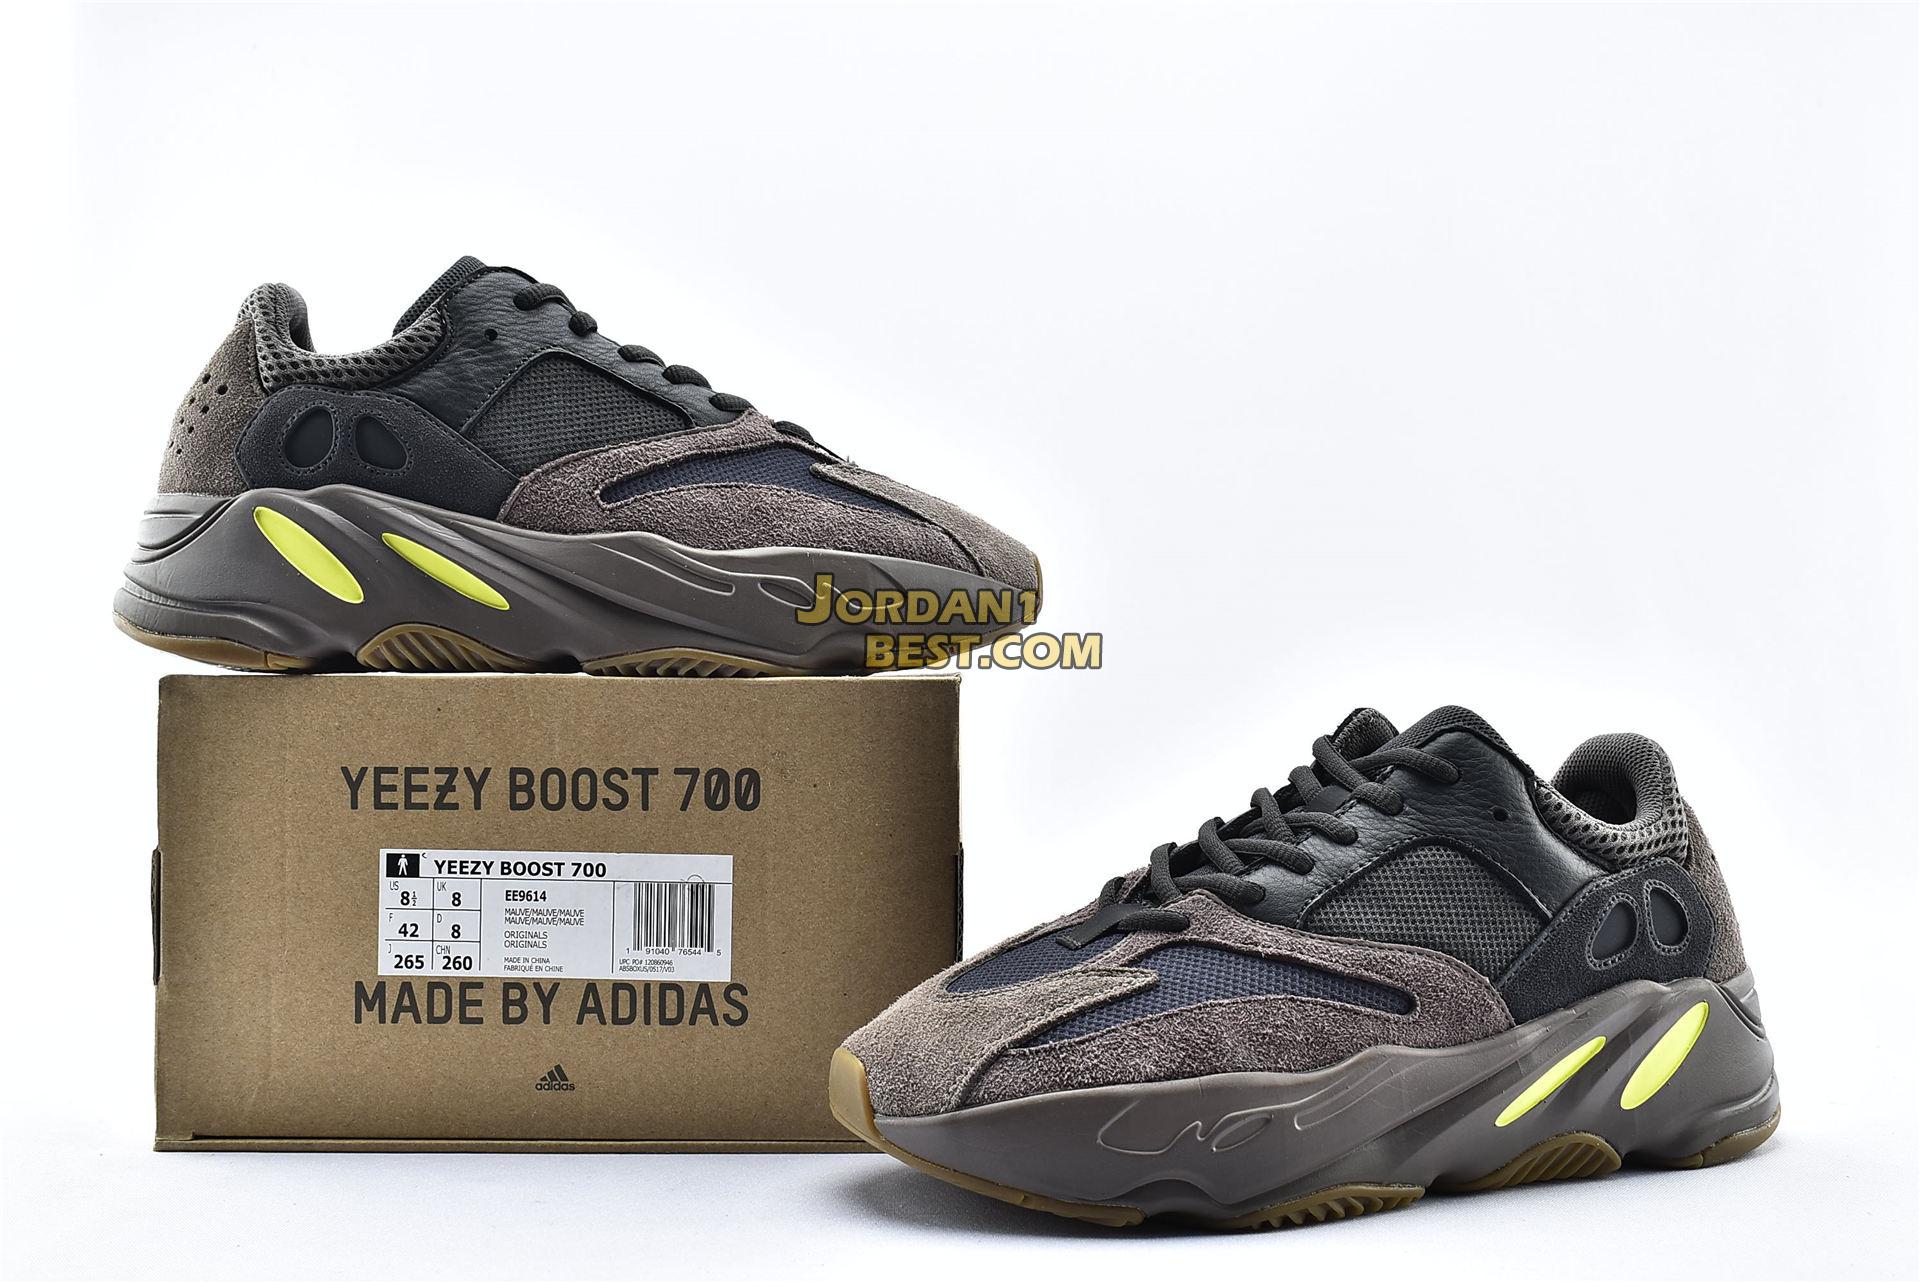 Adidas Yeezy Boost 700 "Mauve" EE9614